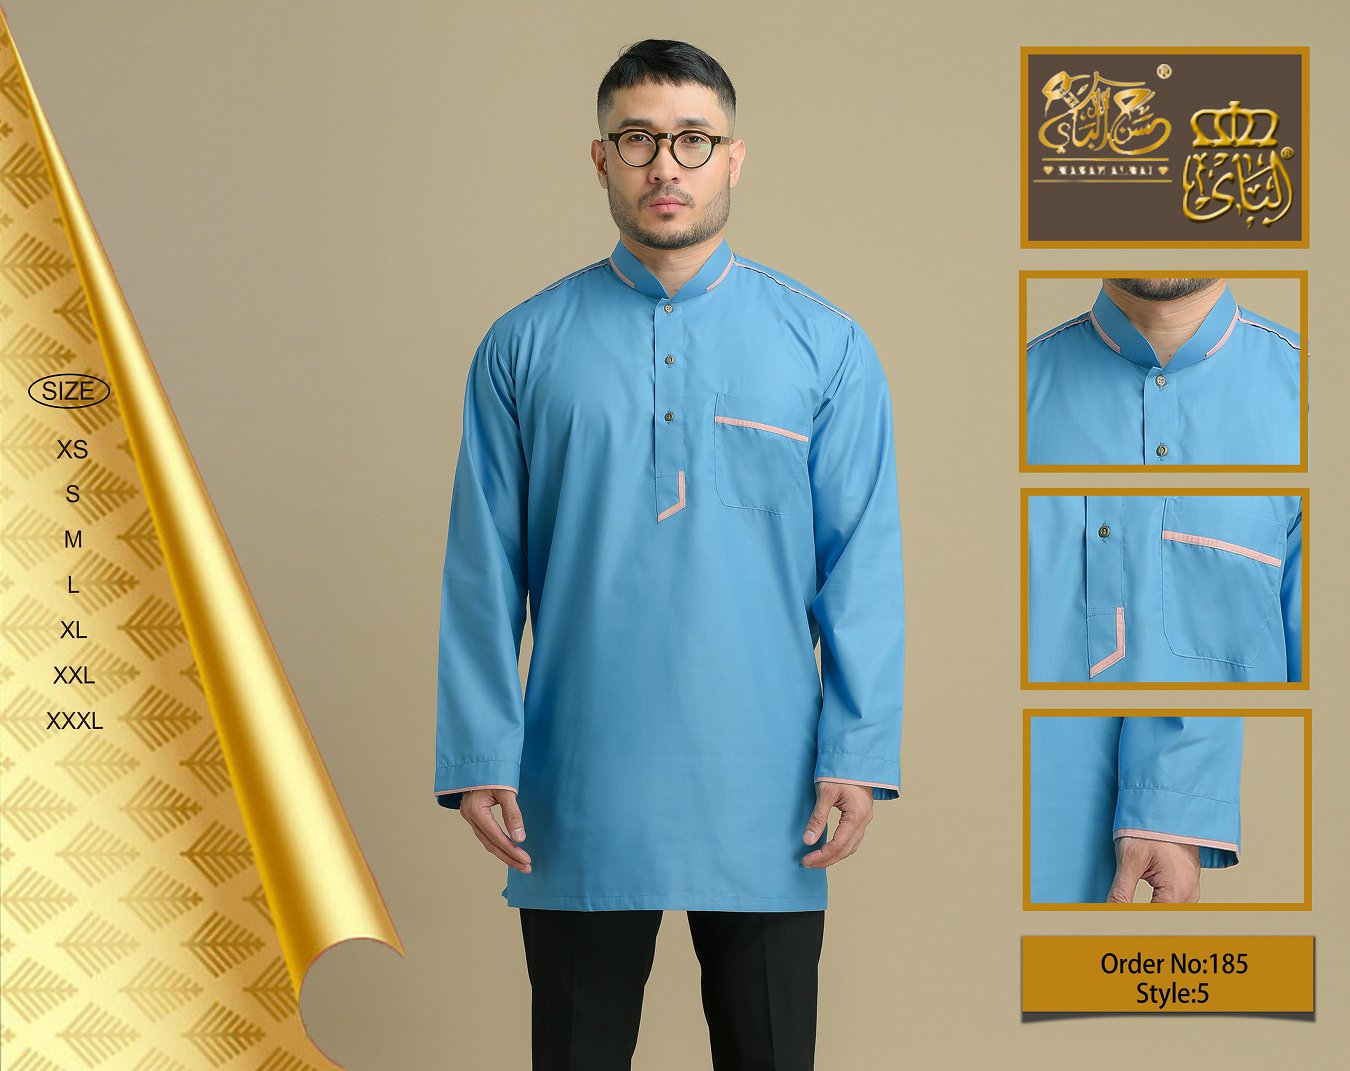 Malay clothing8